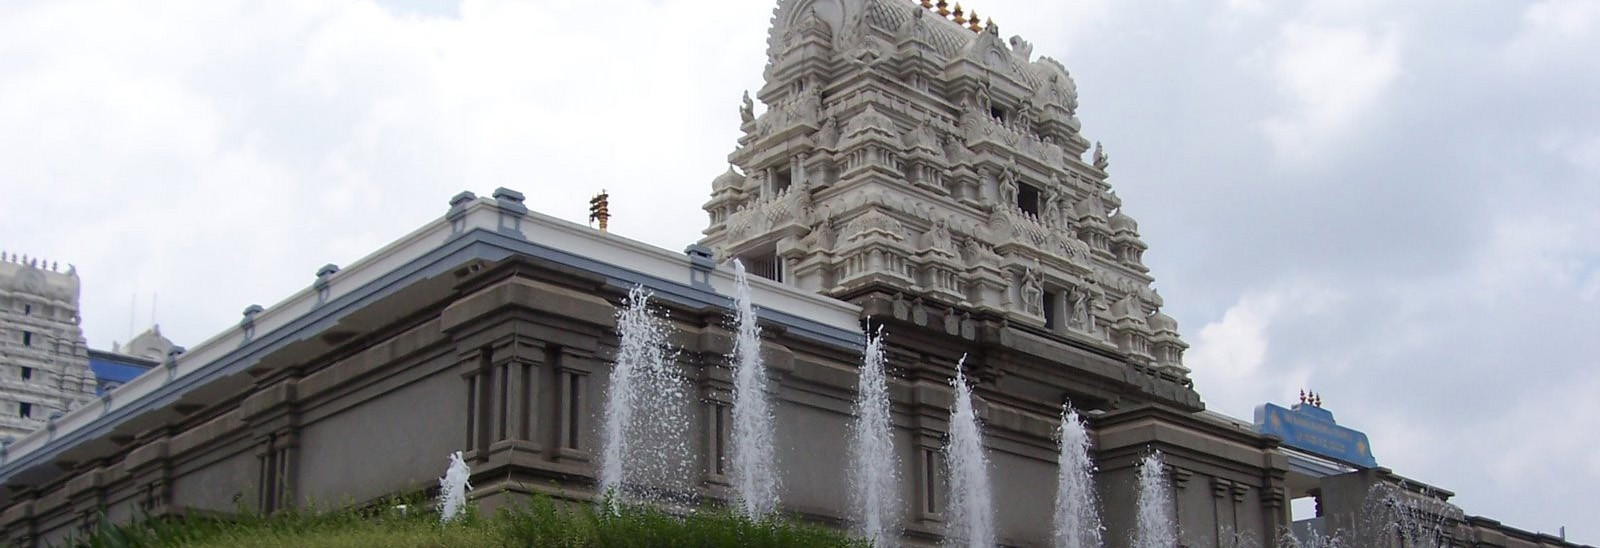 ISKCON Temple Bangalore - Sri Radha Krishna Temple - Biggest ISKCON Temples In The world 